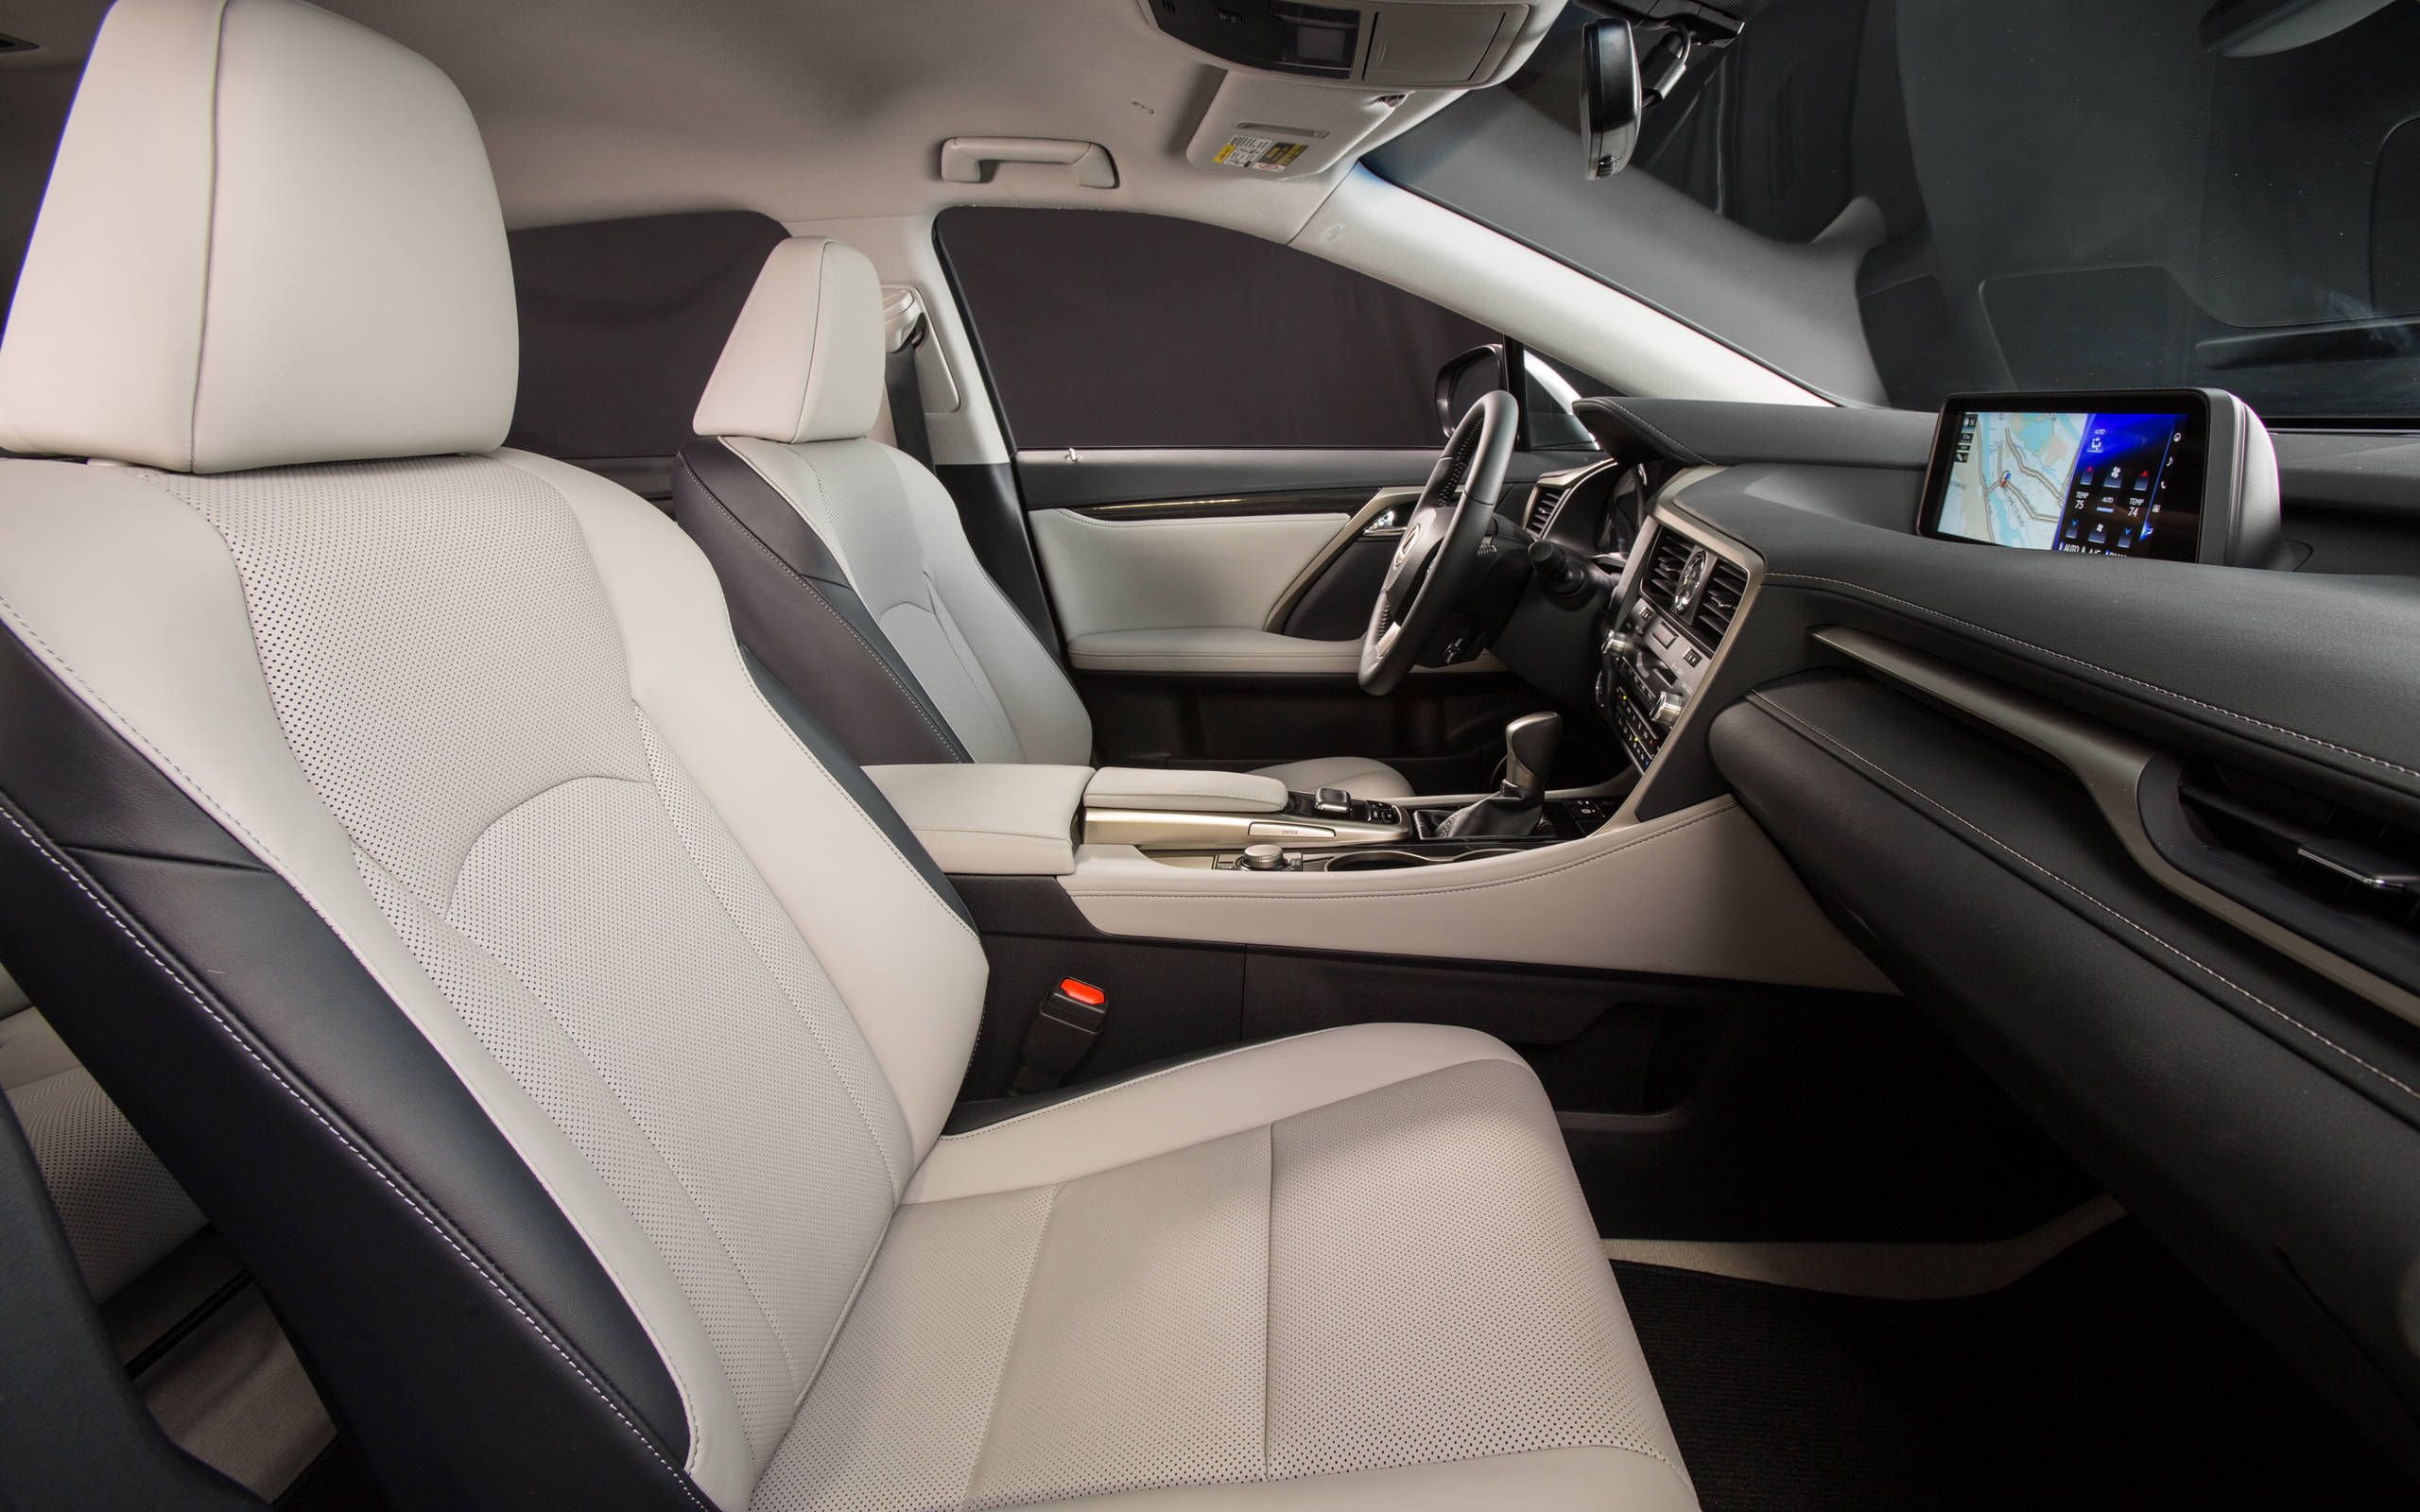 Gallery: 2017 Lexus Rx350 Interior